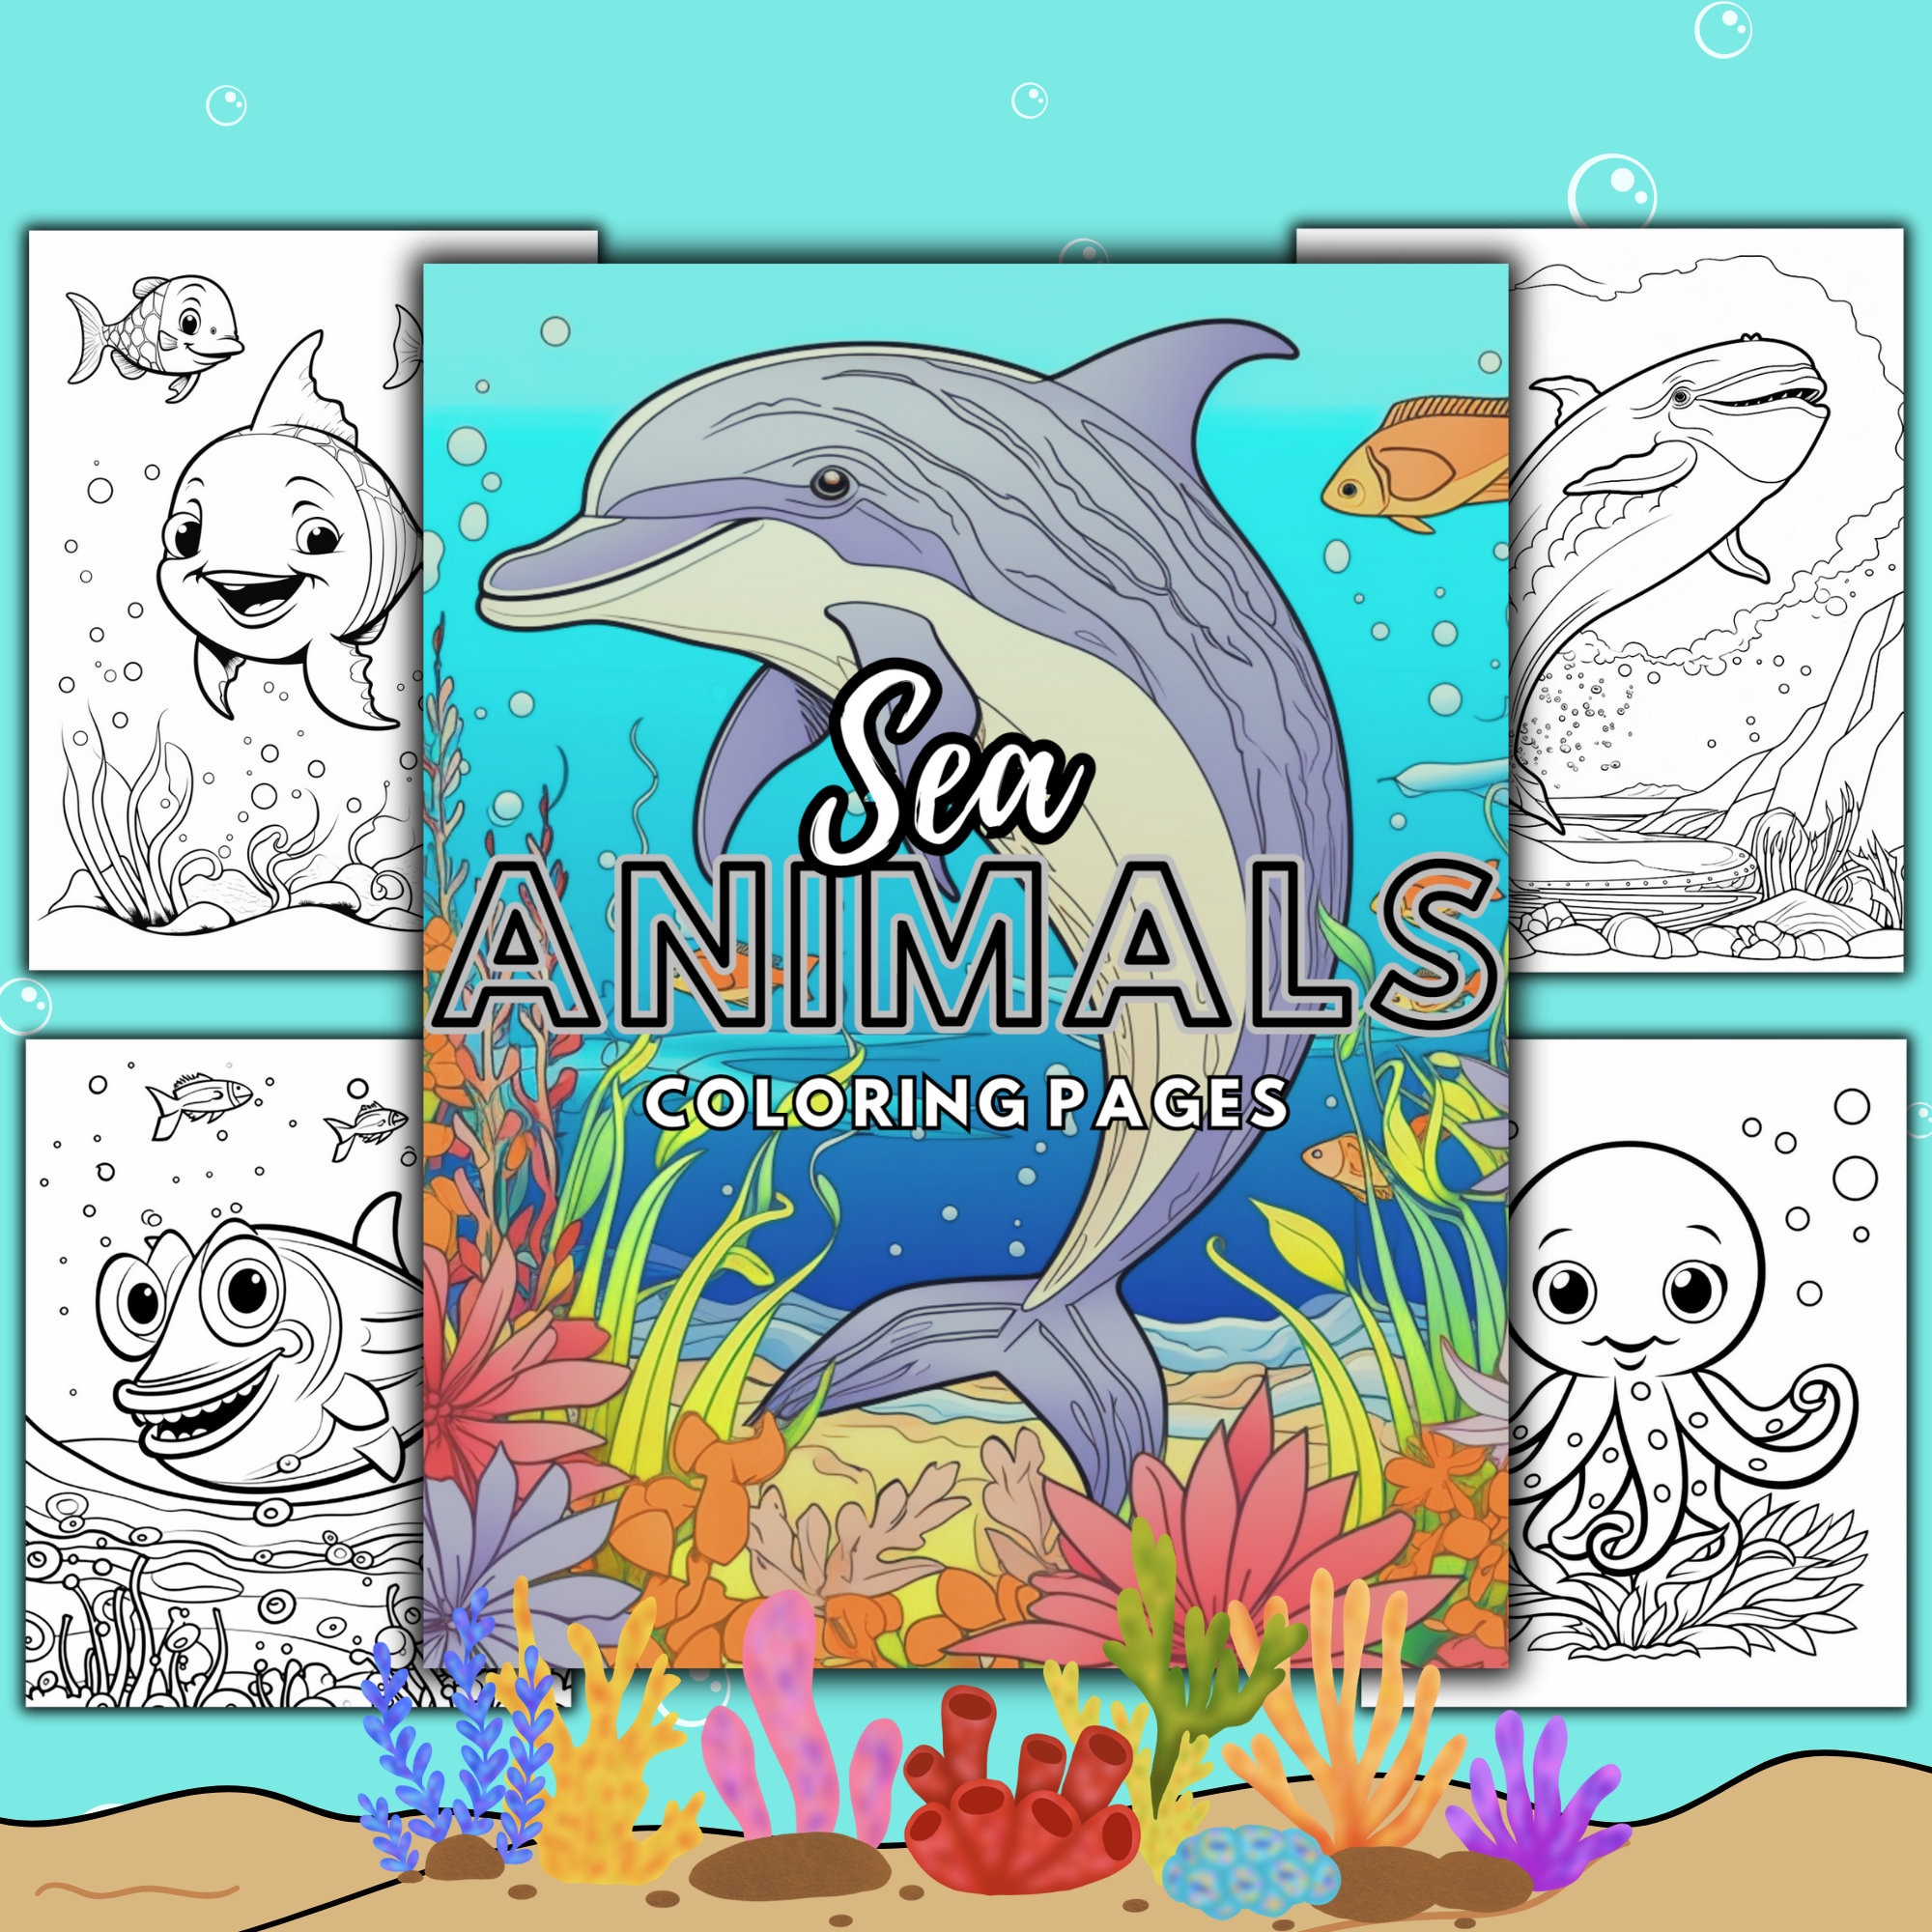 Animals Coloring Book (PLR) – The BossUp PLR Shop